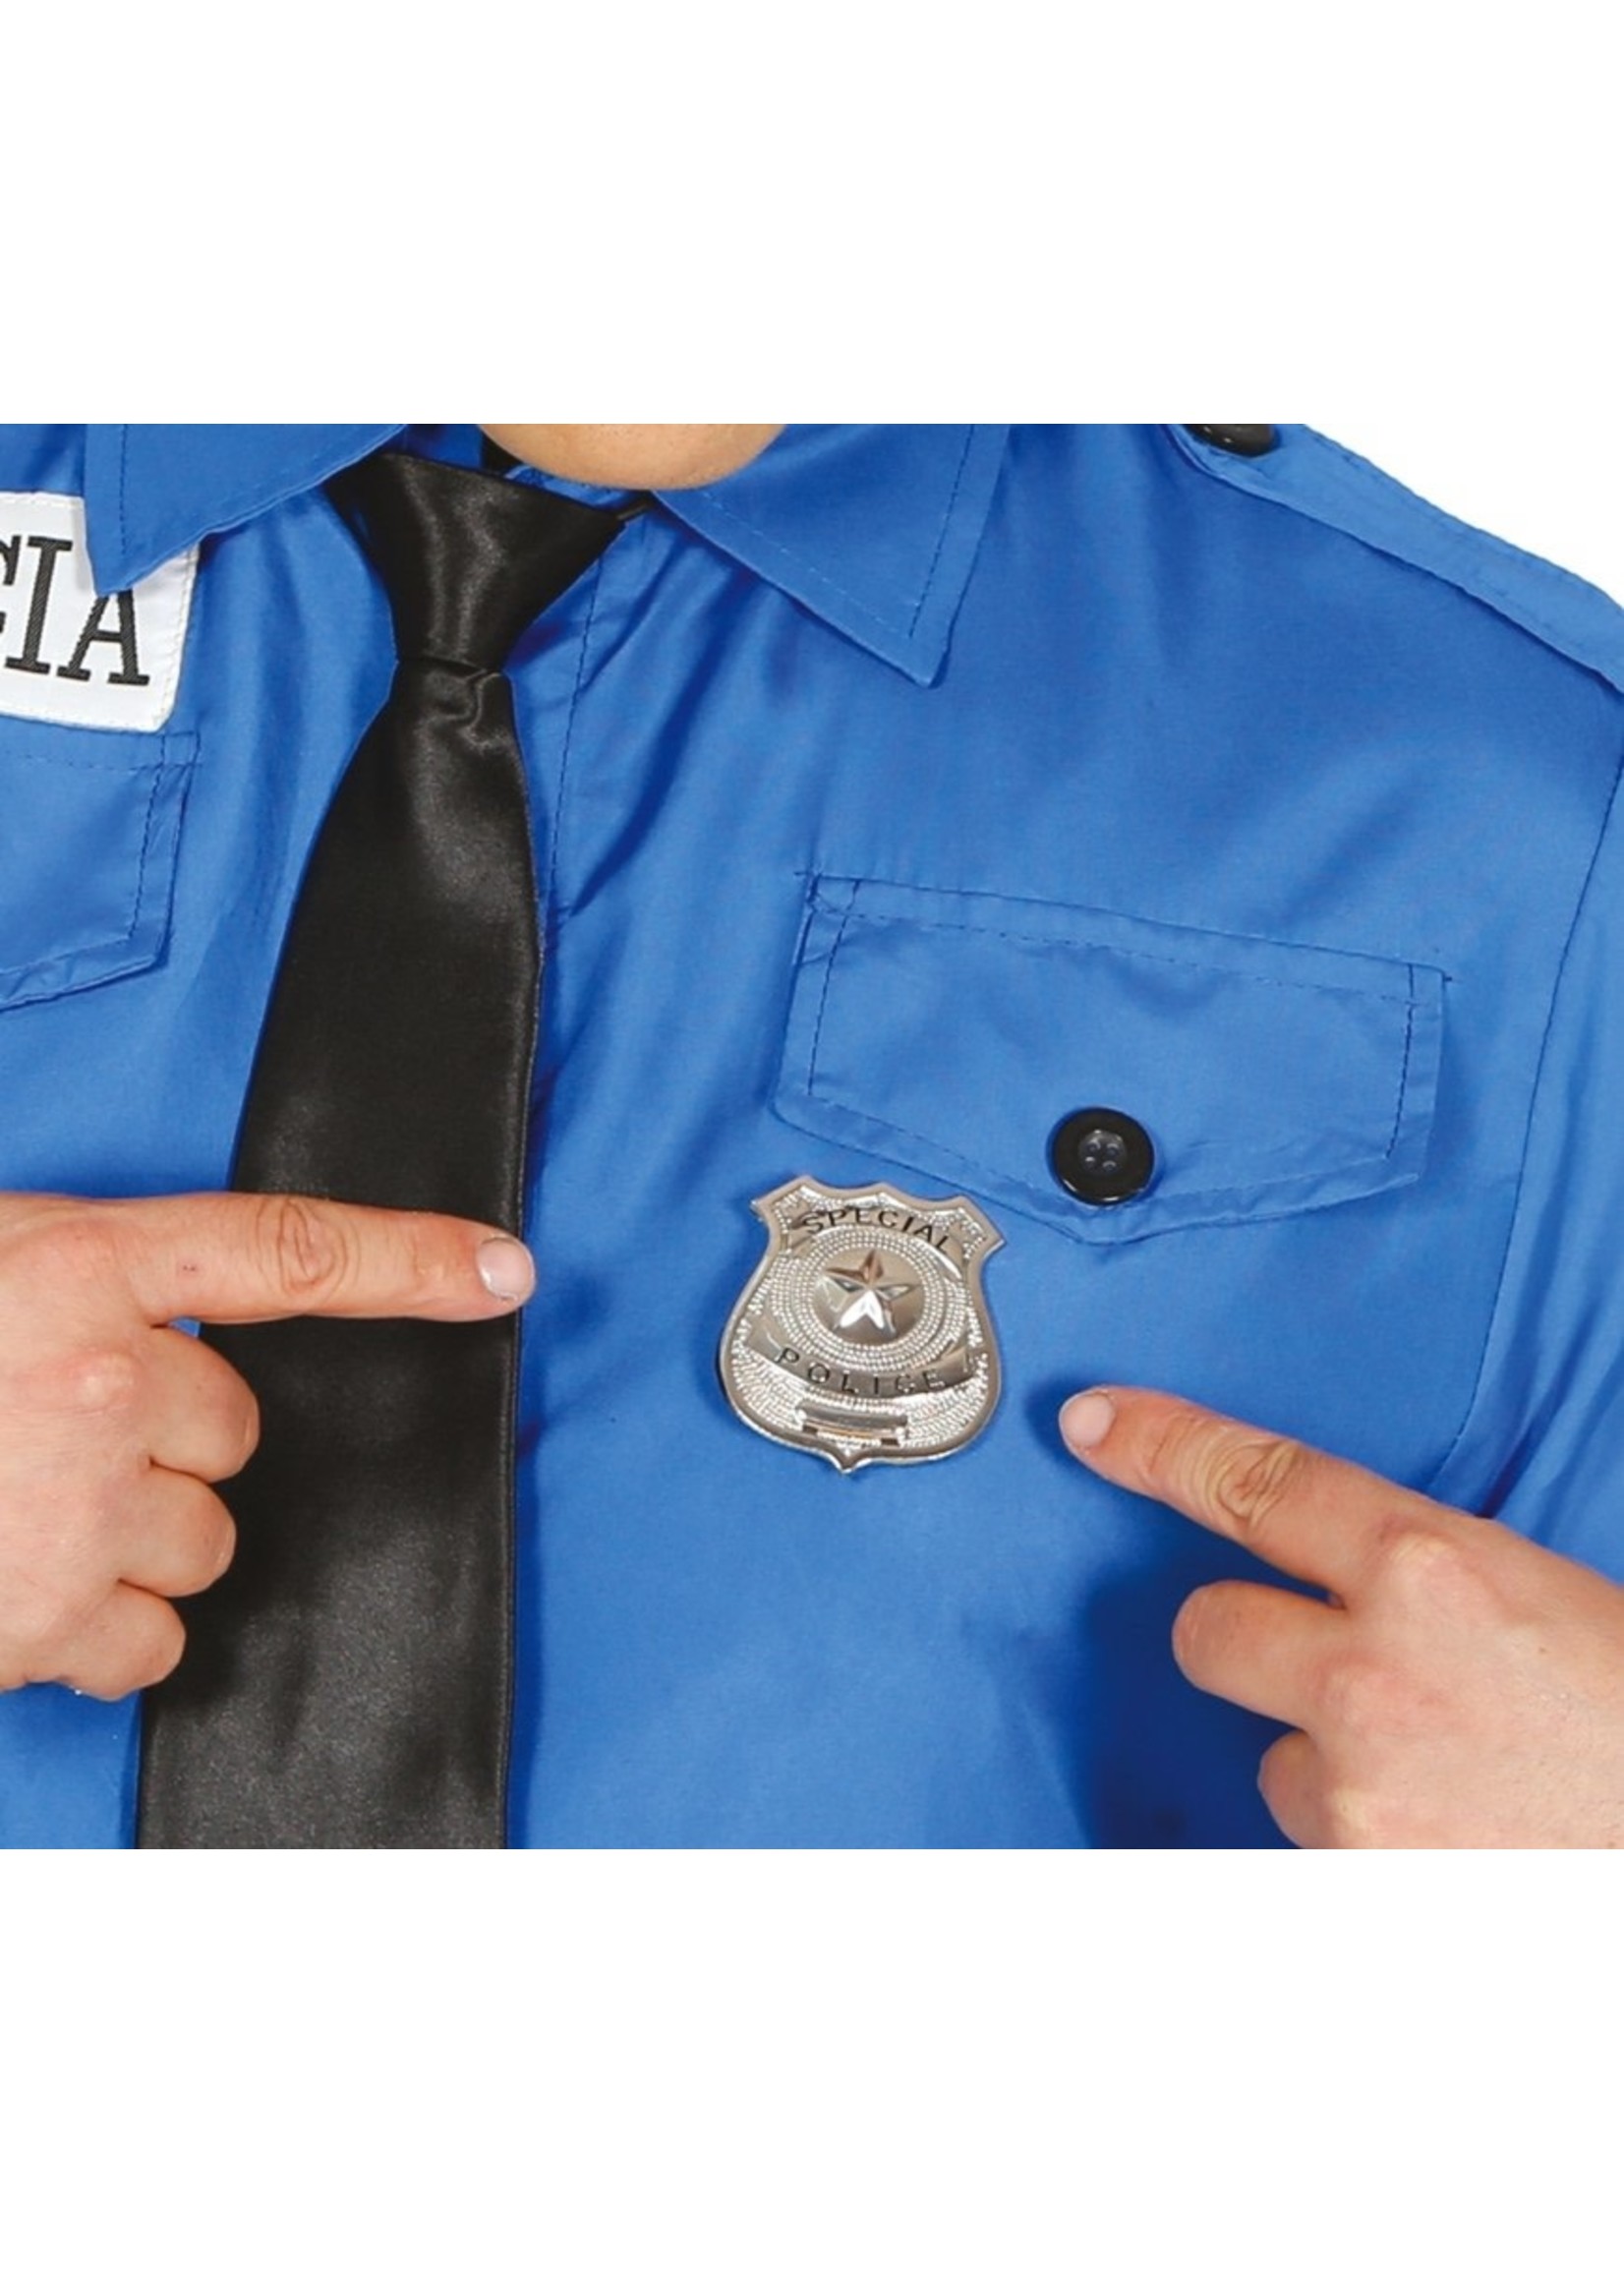 Feestkleding Breda Badge voor politie